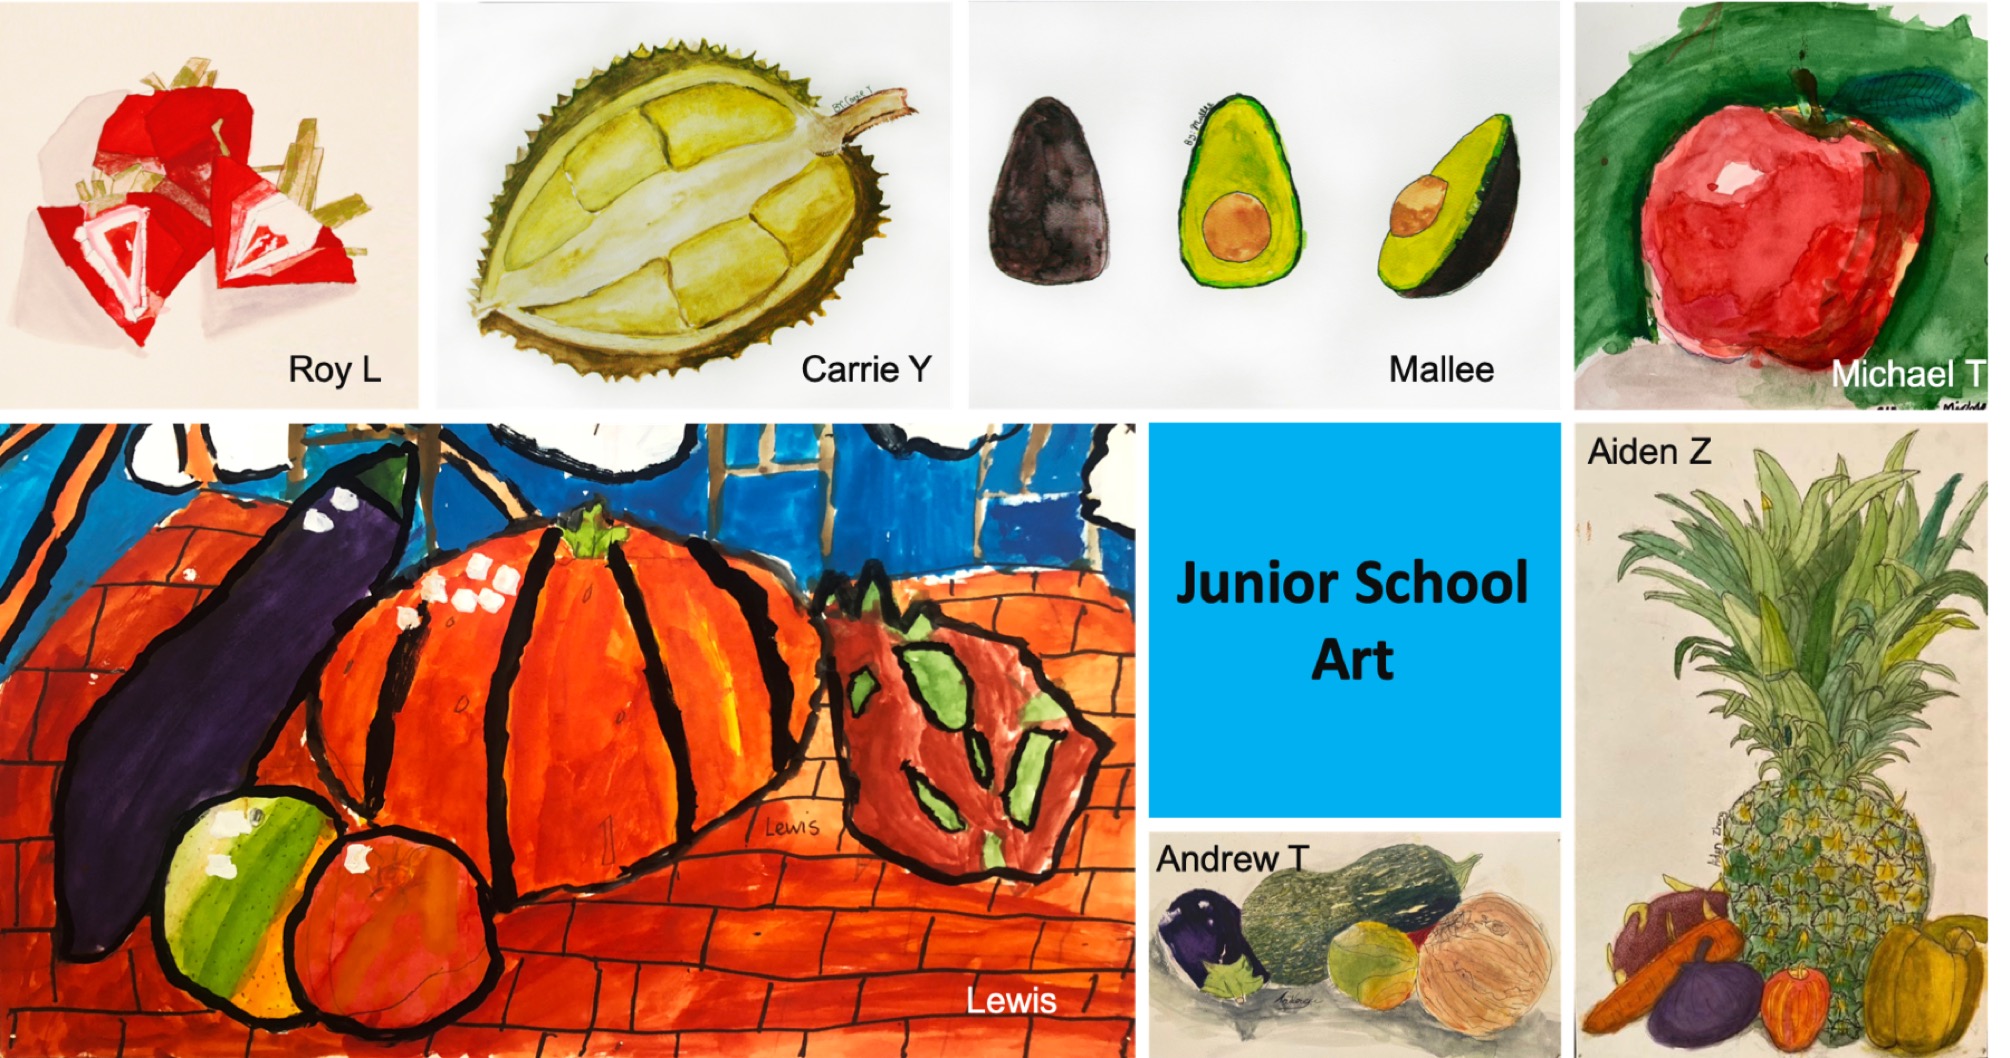 Junior School Art